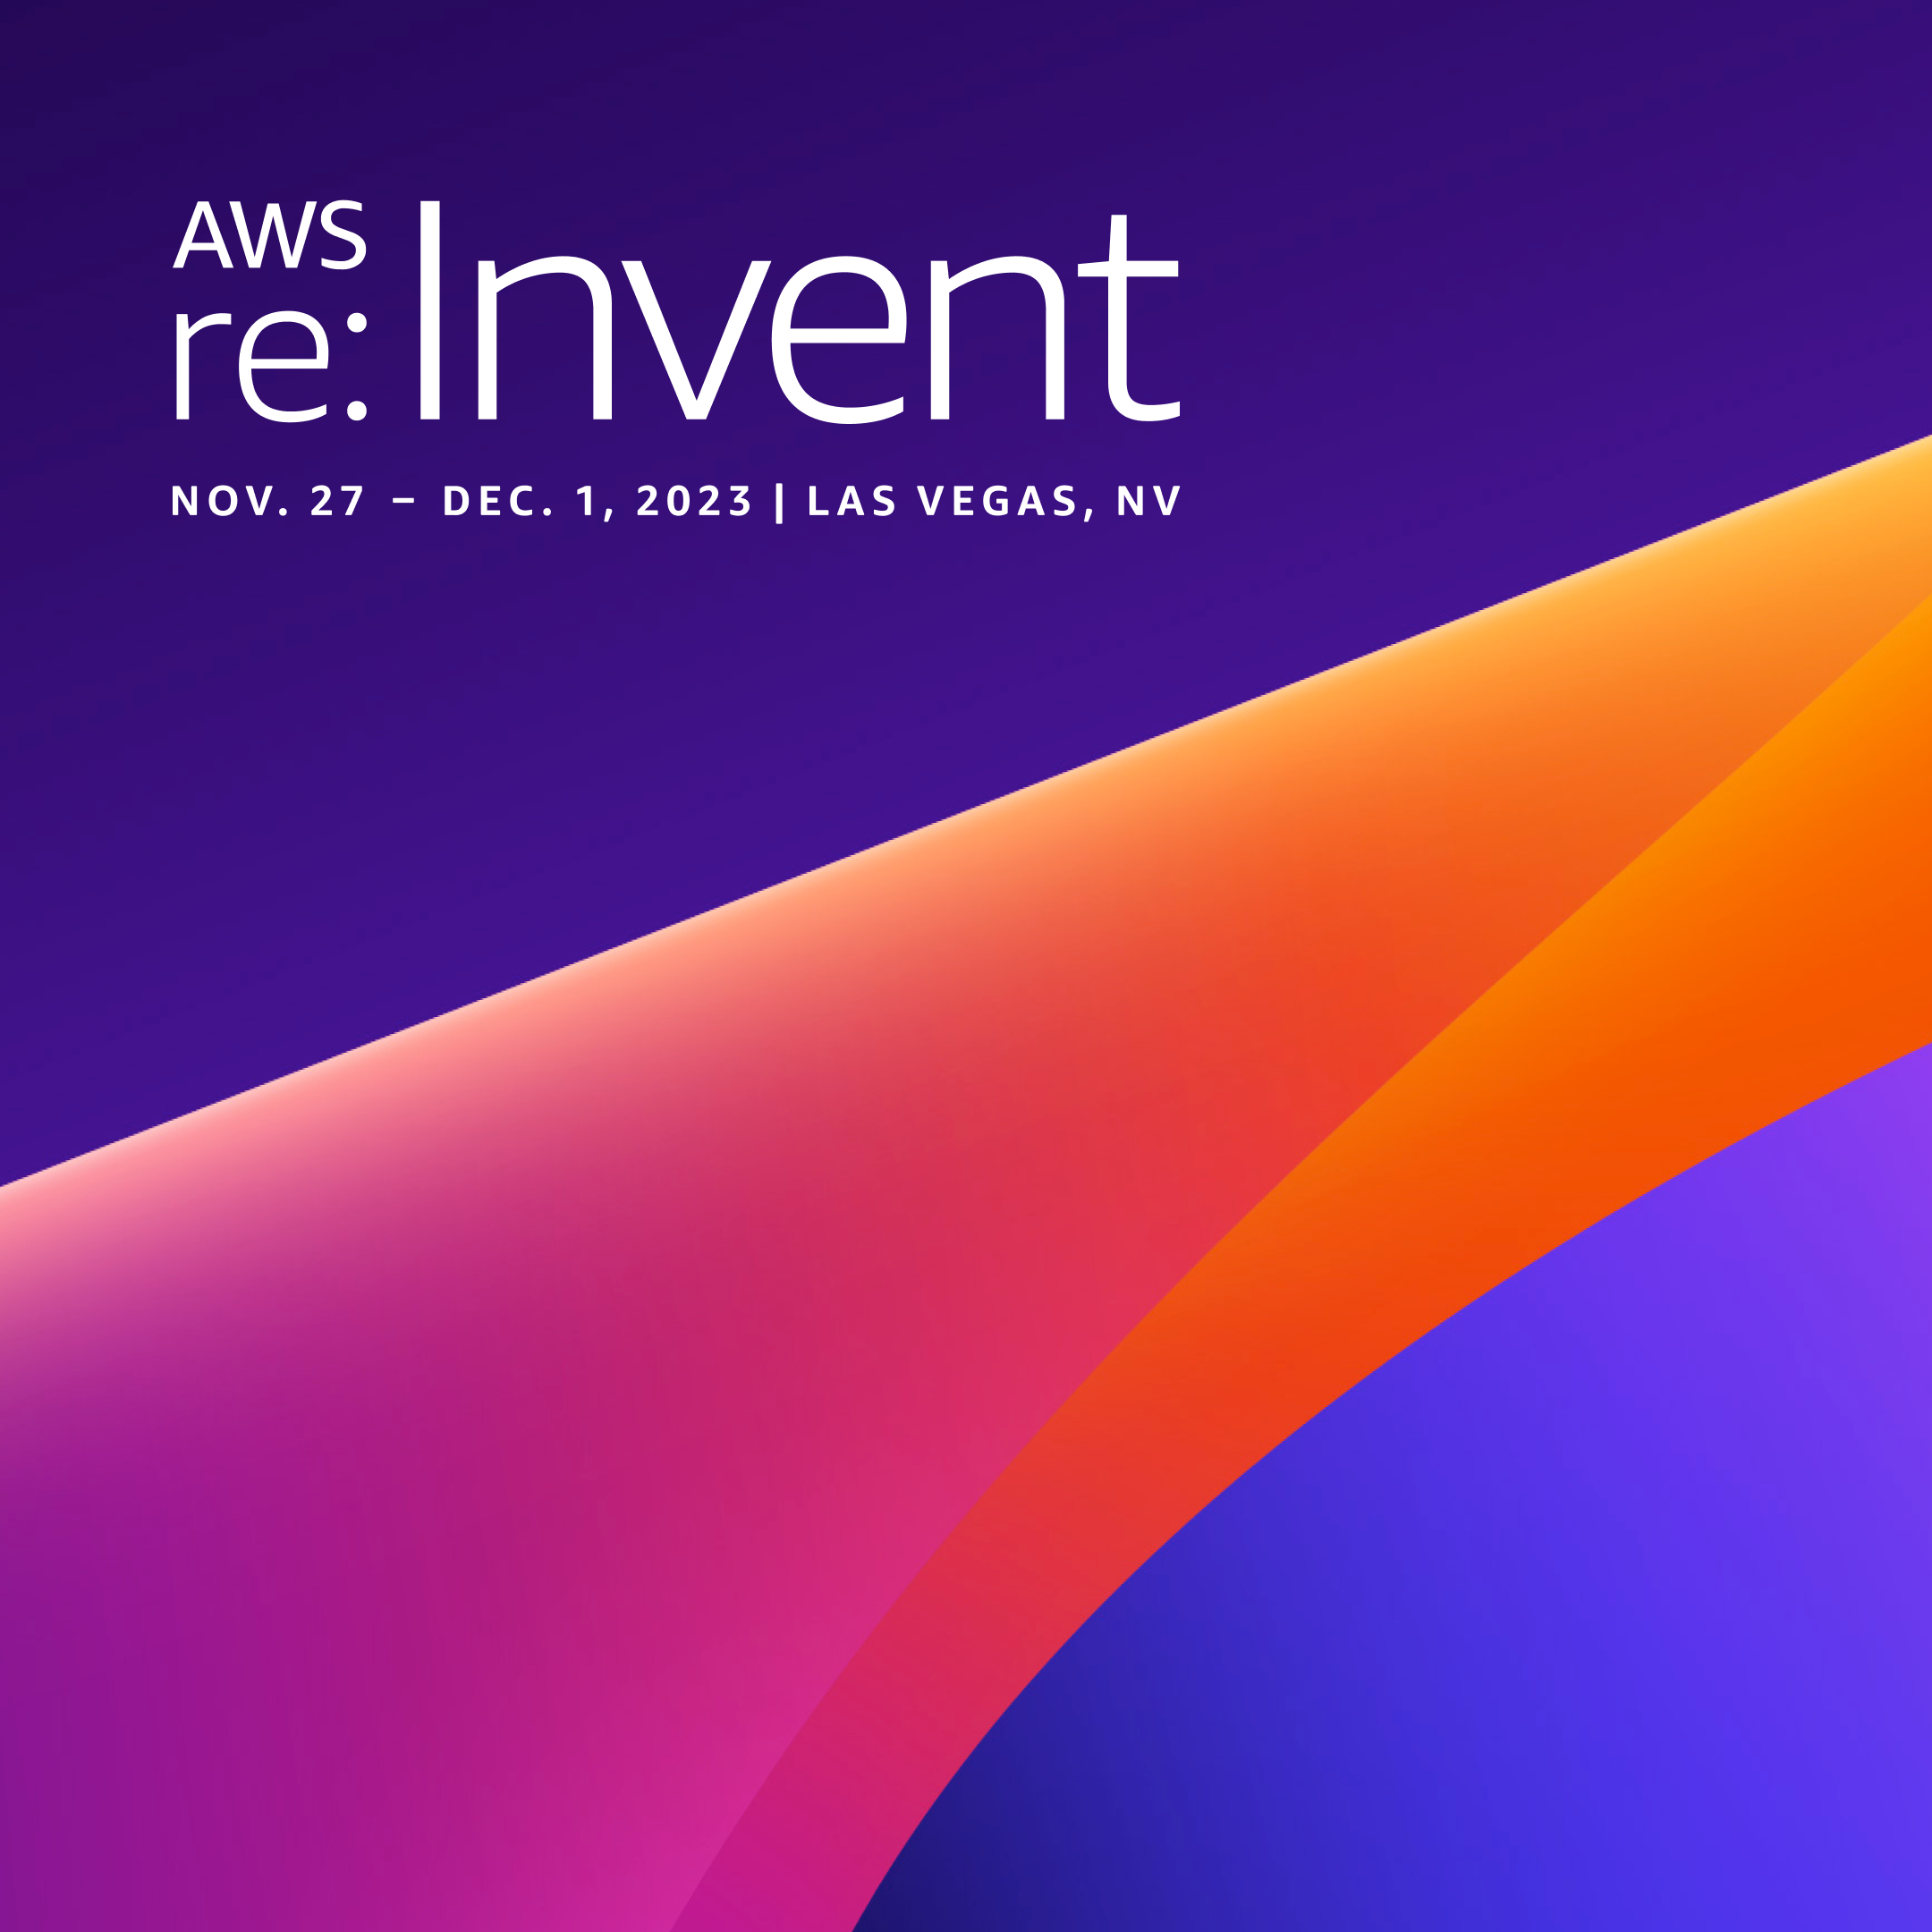 AWS reInvent 2023 Campus Amazon Web Services